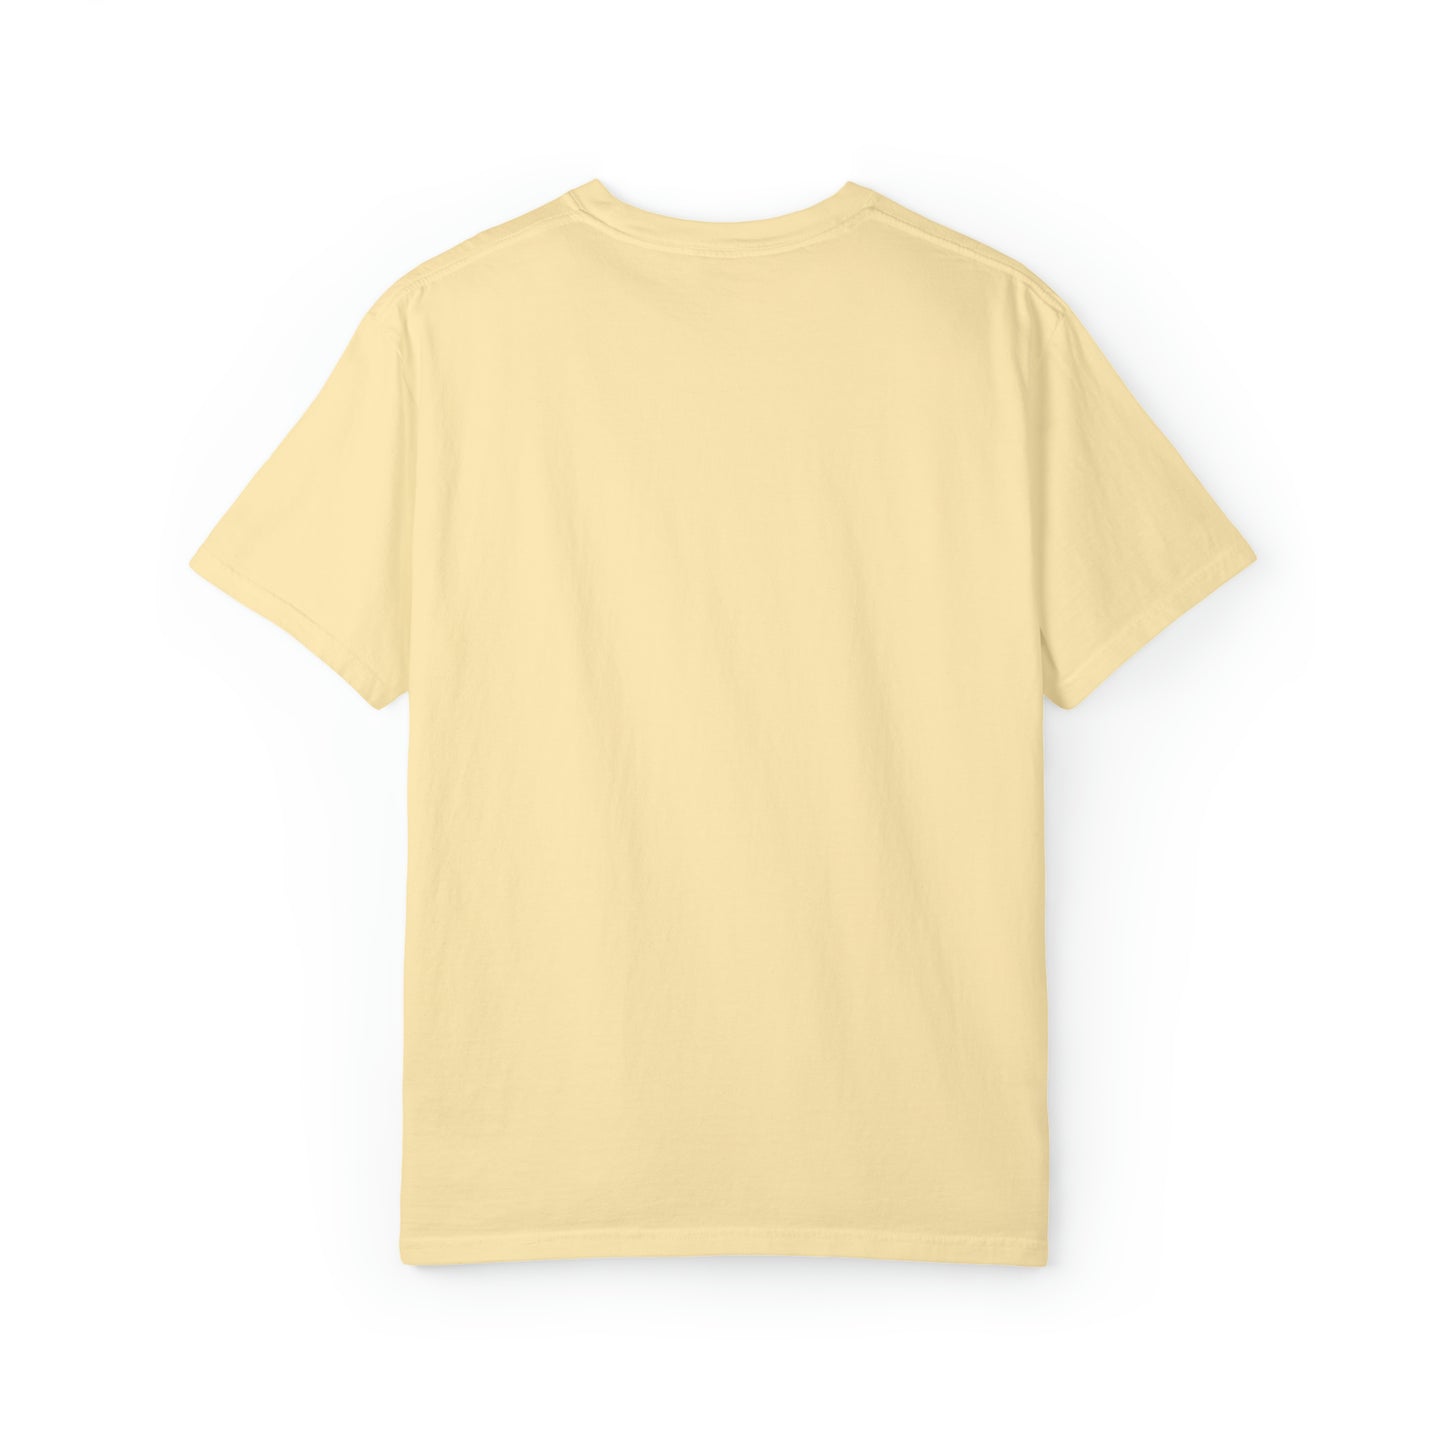 Farm Fresh Pumpkins Unisex Garment-Dyed T-shirt, Thanksgiving